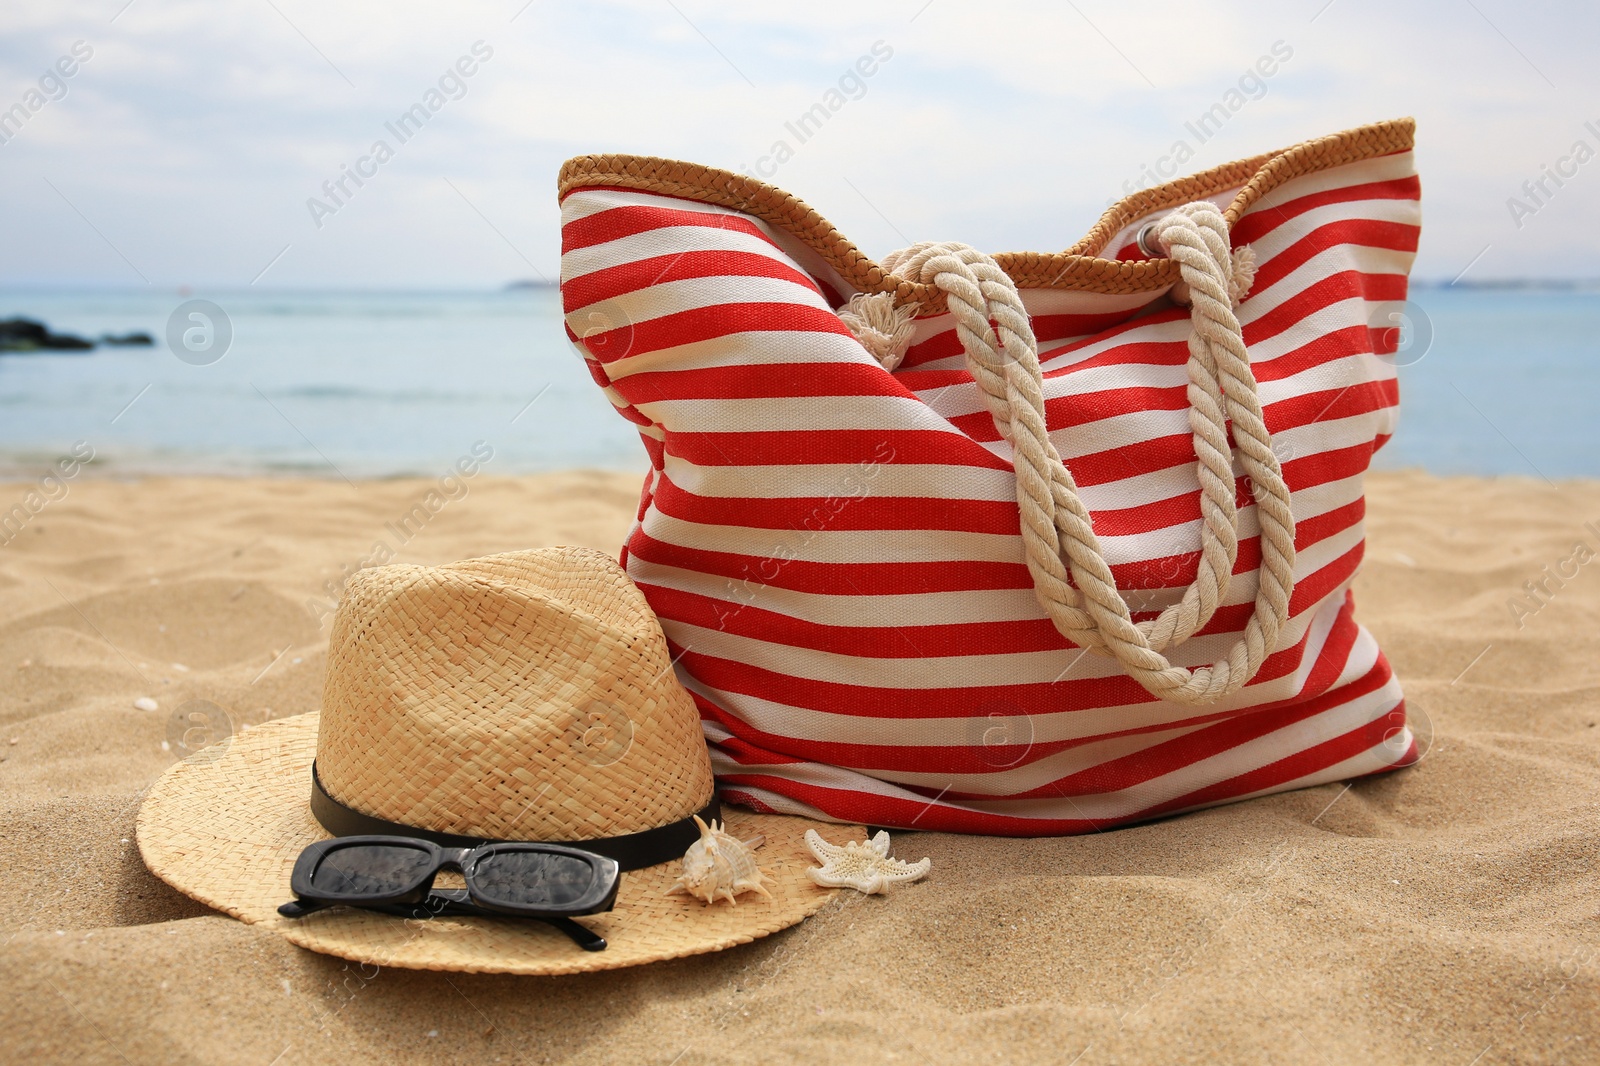 Photo of Stylish striped bag with straw hat, sunglasses, seashell and starfish on sandy beach near sea